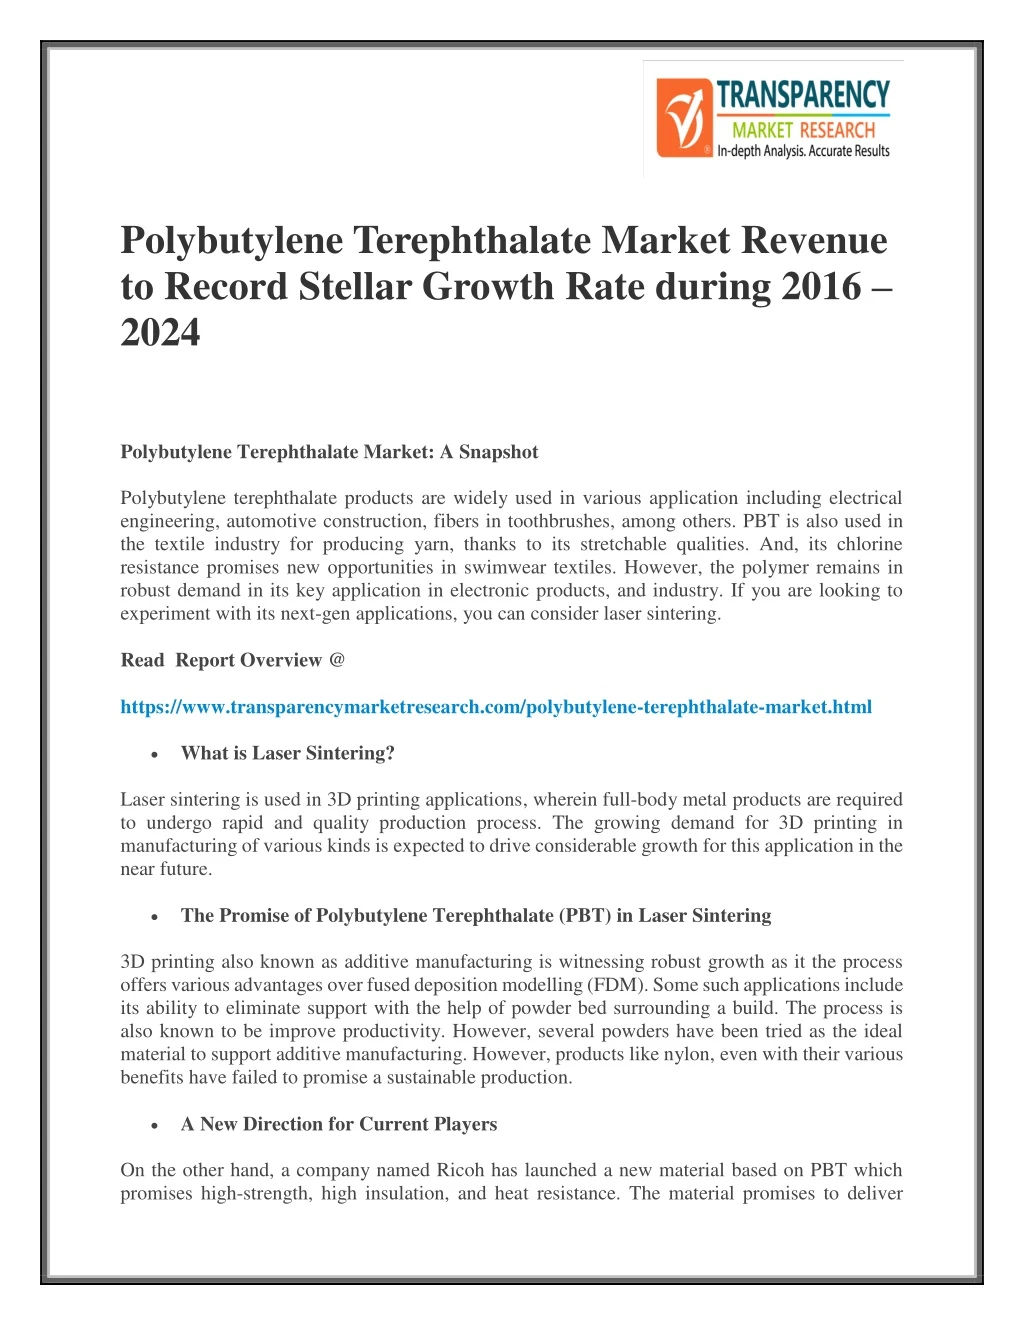 polybutylene terephthalate market revenue